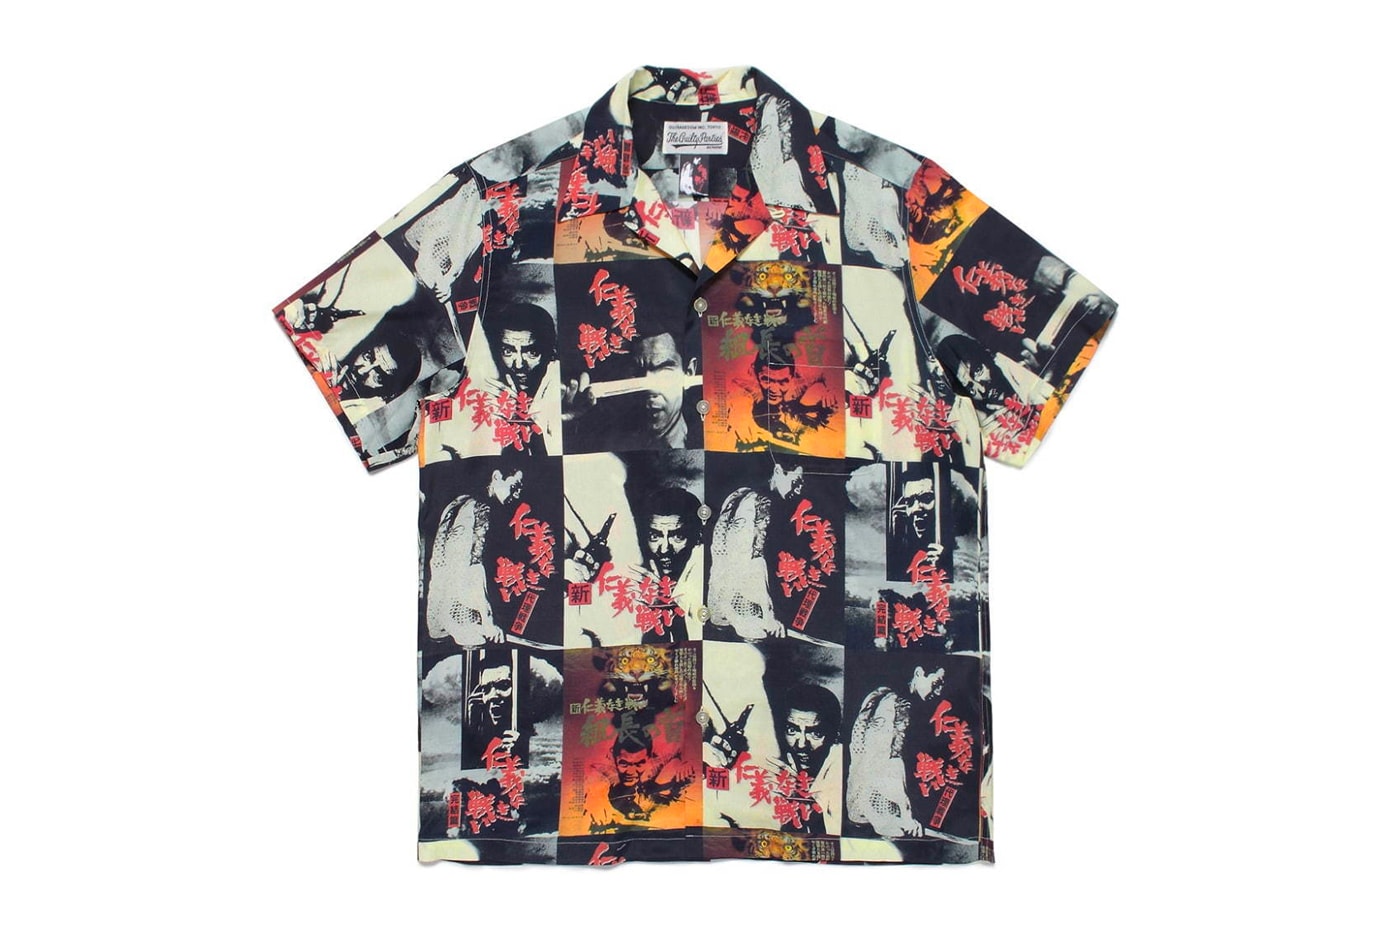 WACKO MARIA Battles Without Honor and Humanity Hawaiian Shirts short sleeve button ups graphics Kinji Fukasaku japanese streetwear menswear spring summer 2020 collection